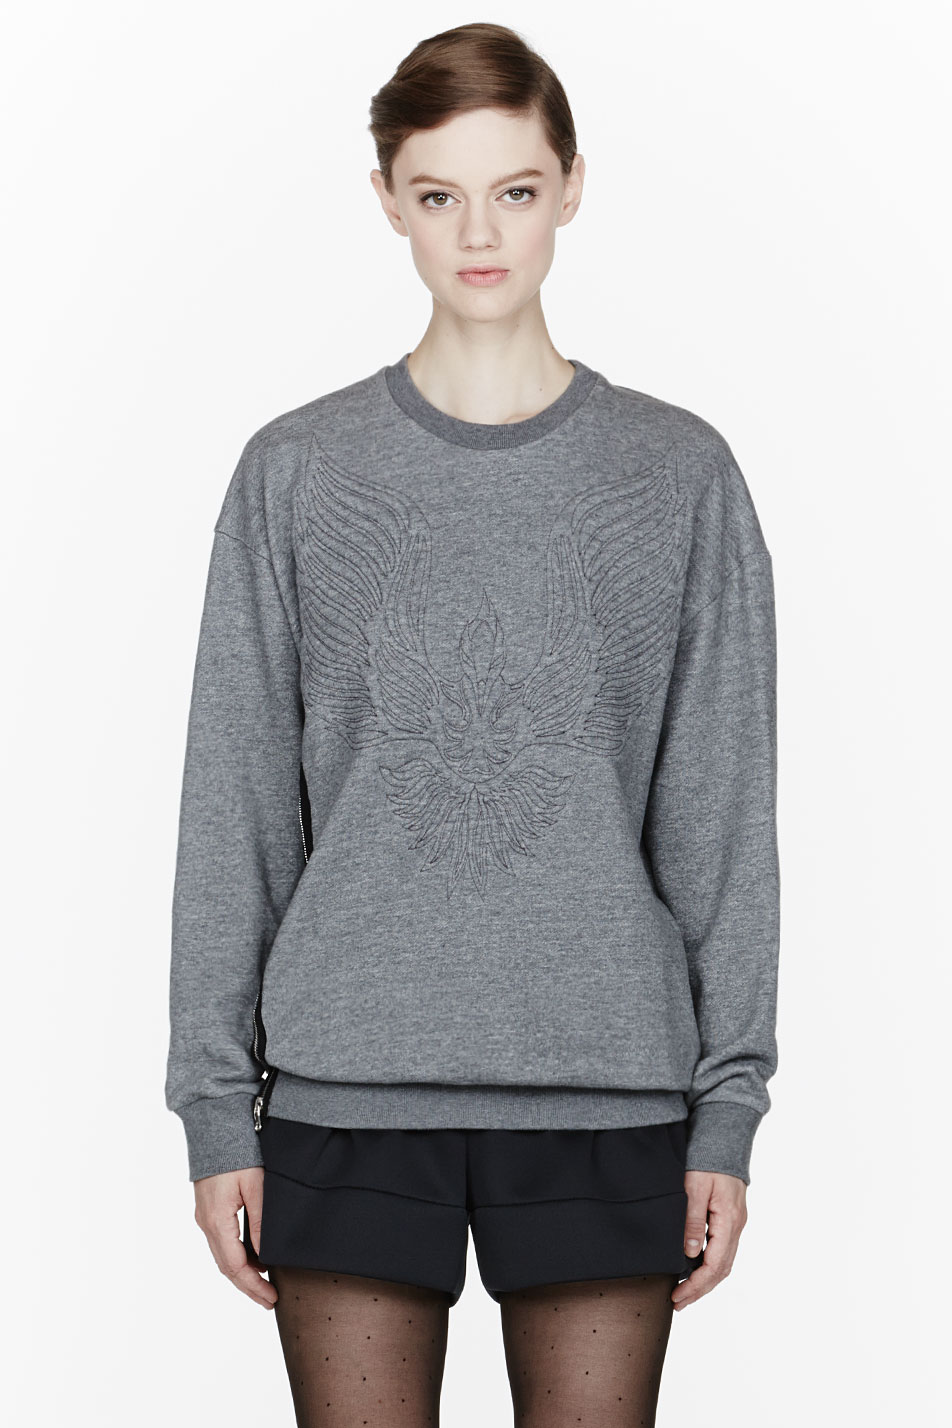 Download 3.1 Phillip Lim French Terry Oversize Sweatshirt in Grey ...